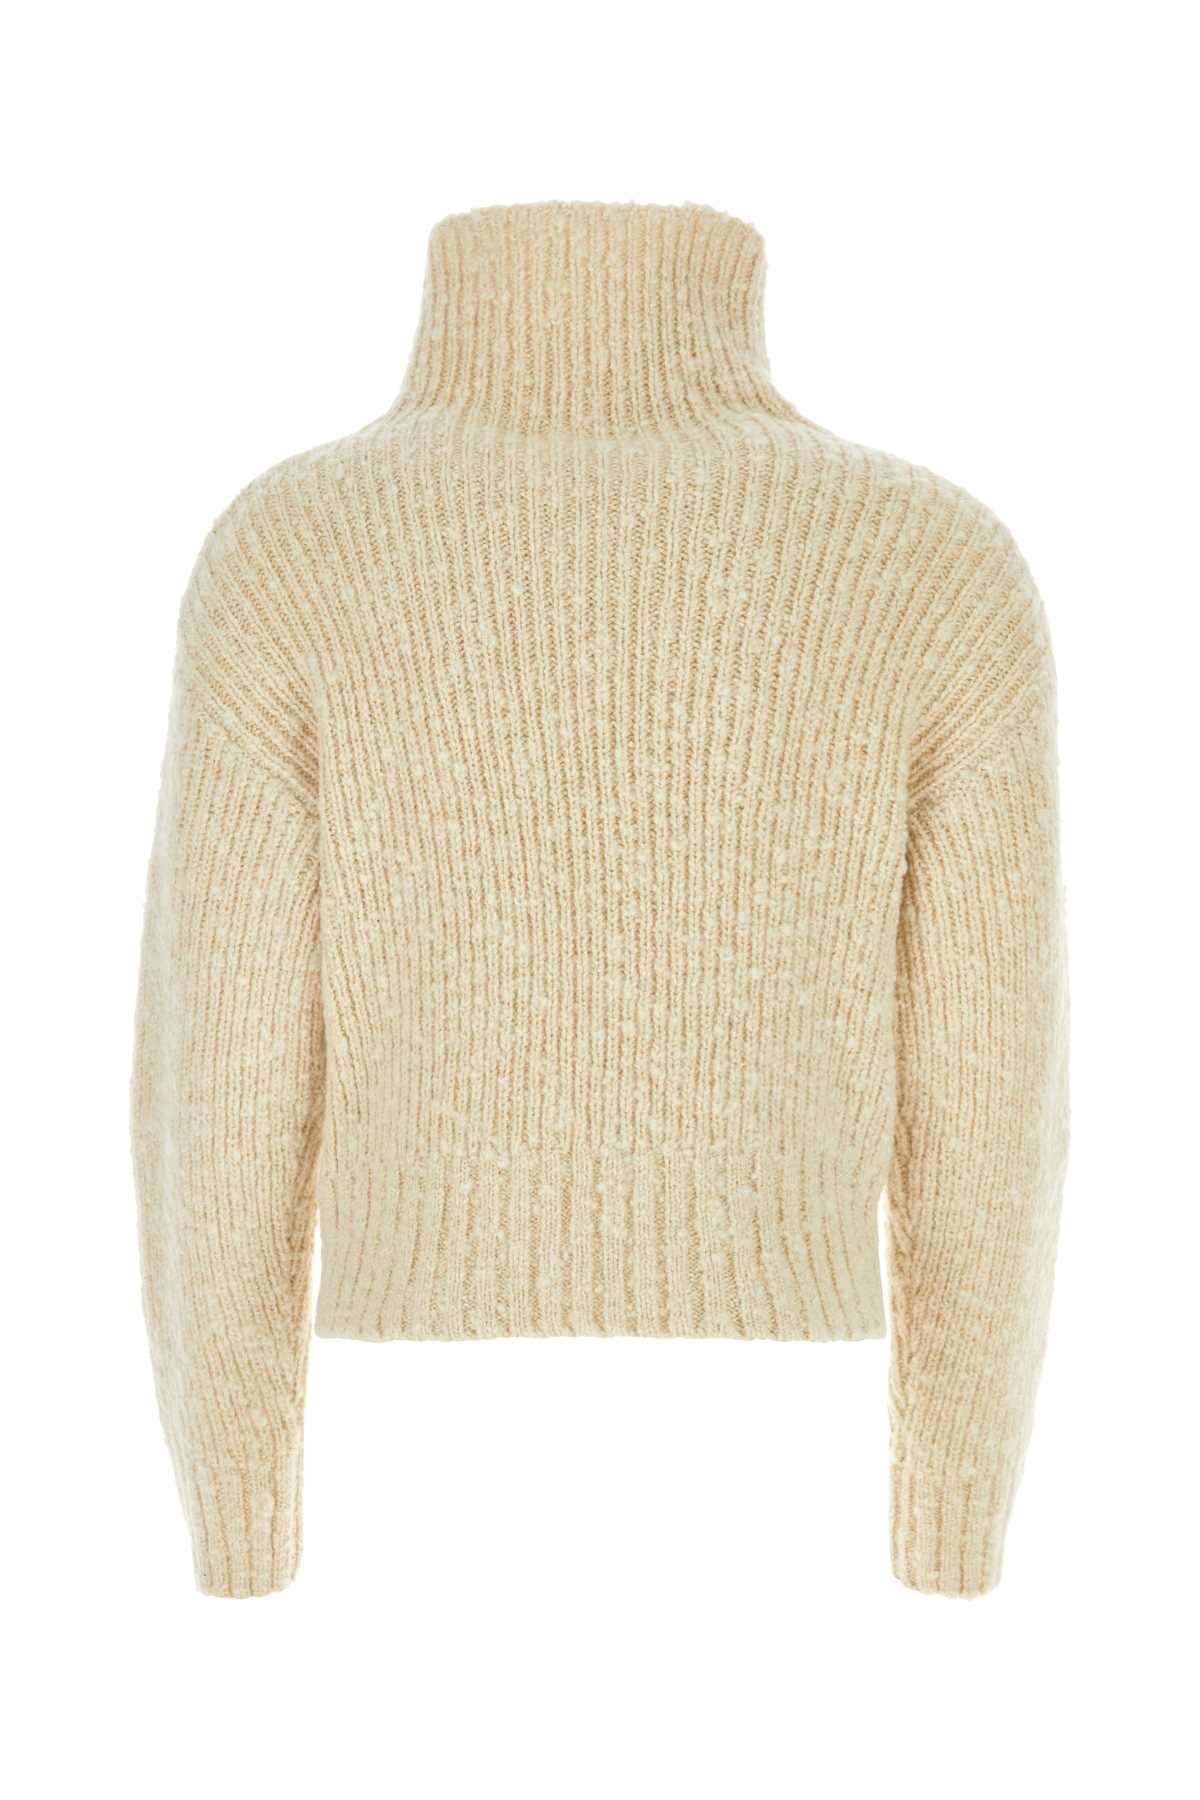 Shop Ami Alexandre Mattiussi Ivory Wool Blend Sweater